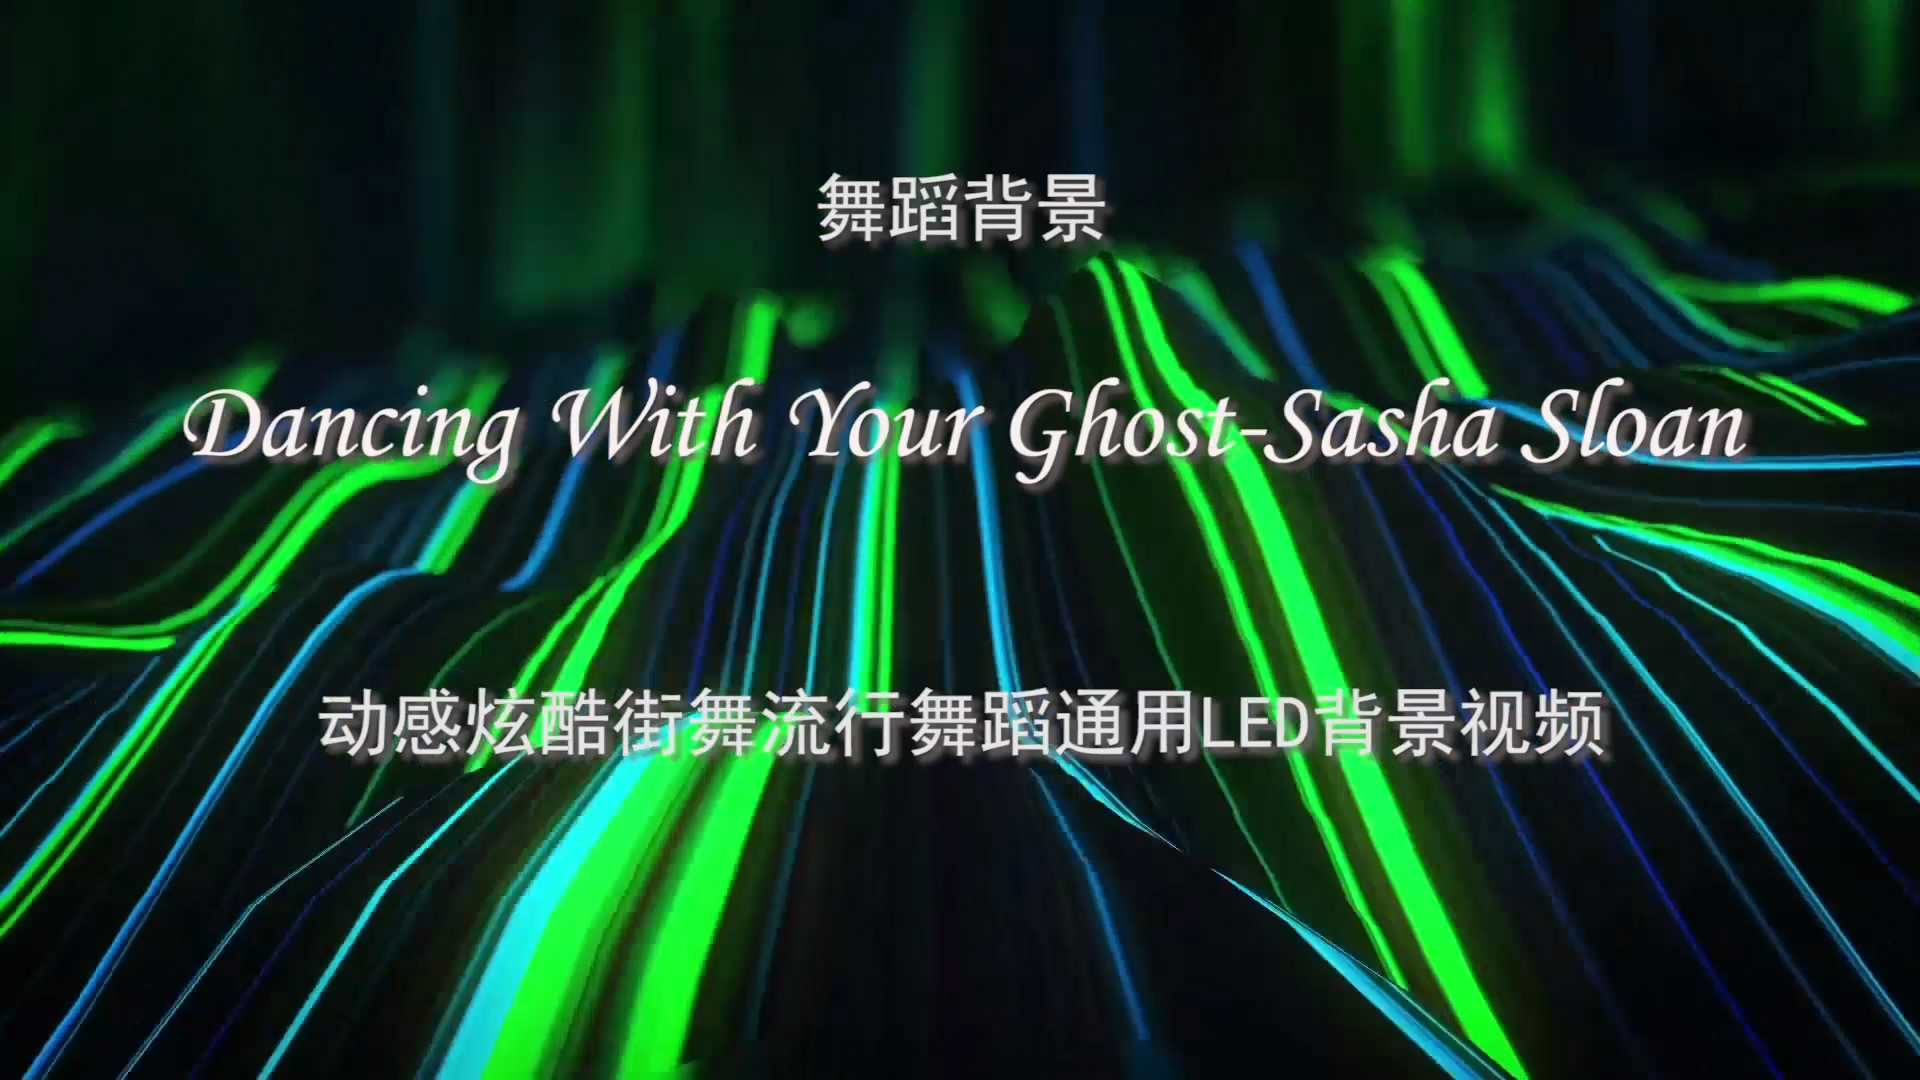 Dancing With Your Ghost-Sasha Sloan 与你的灵魂共舞 动感炫酷街舞流行歌舞LED背景大屏幕视频素材TV